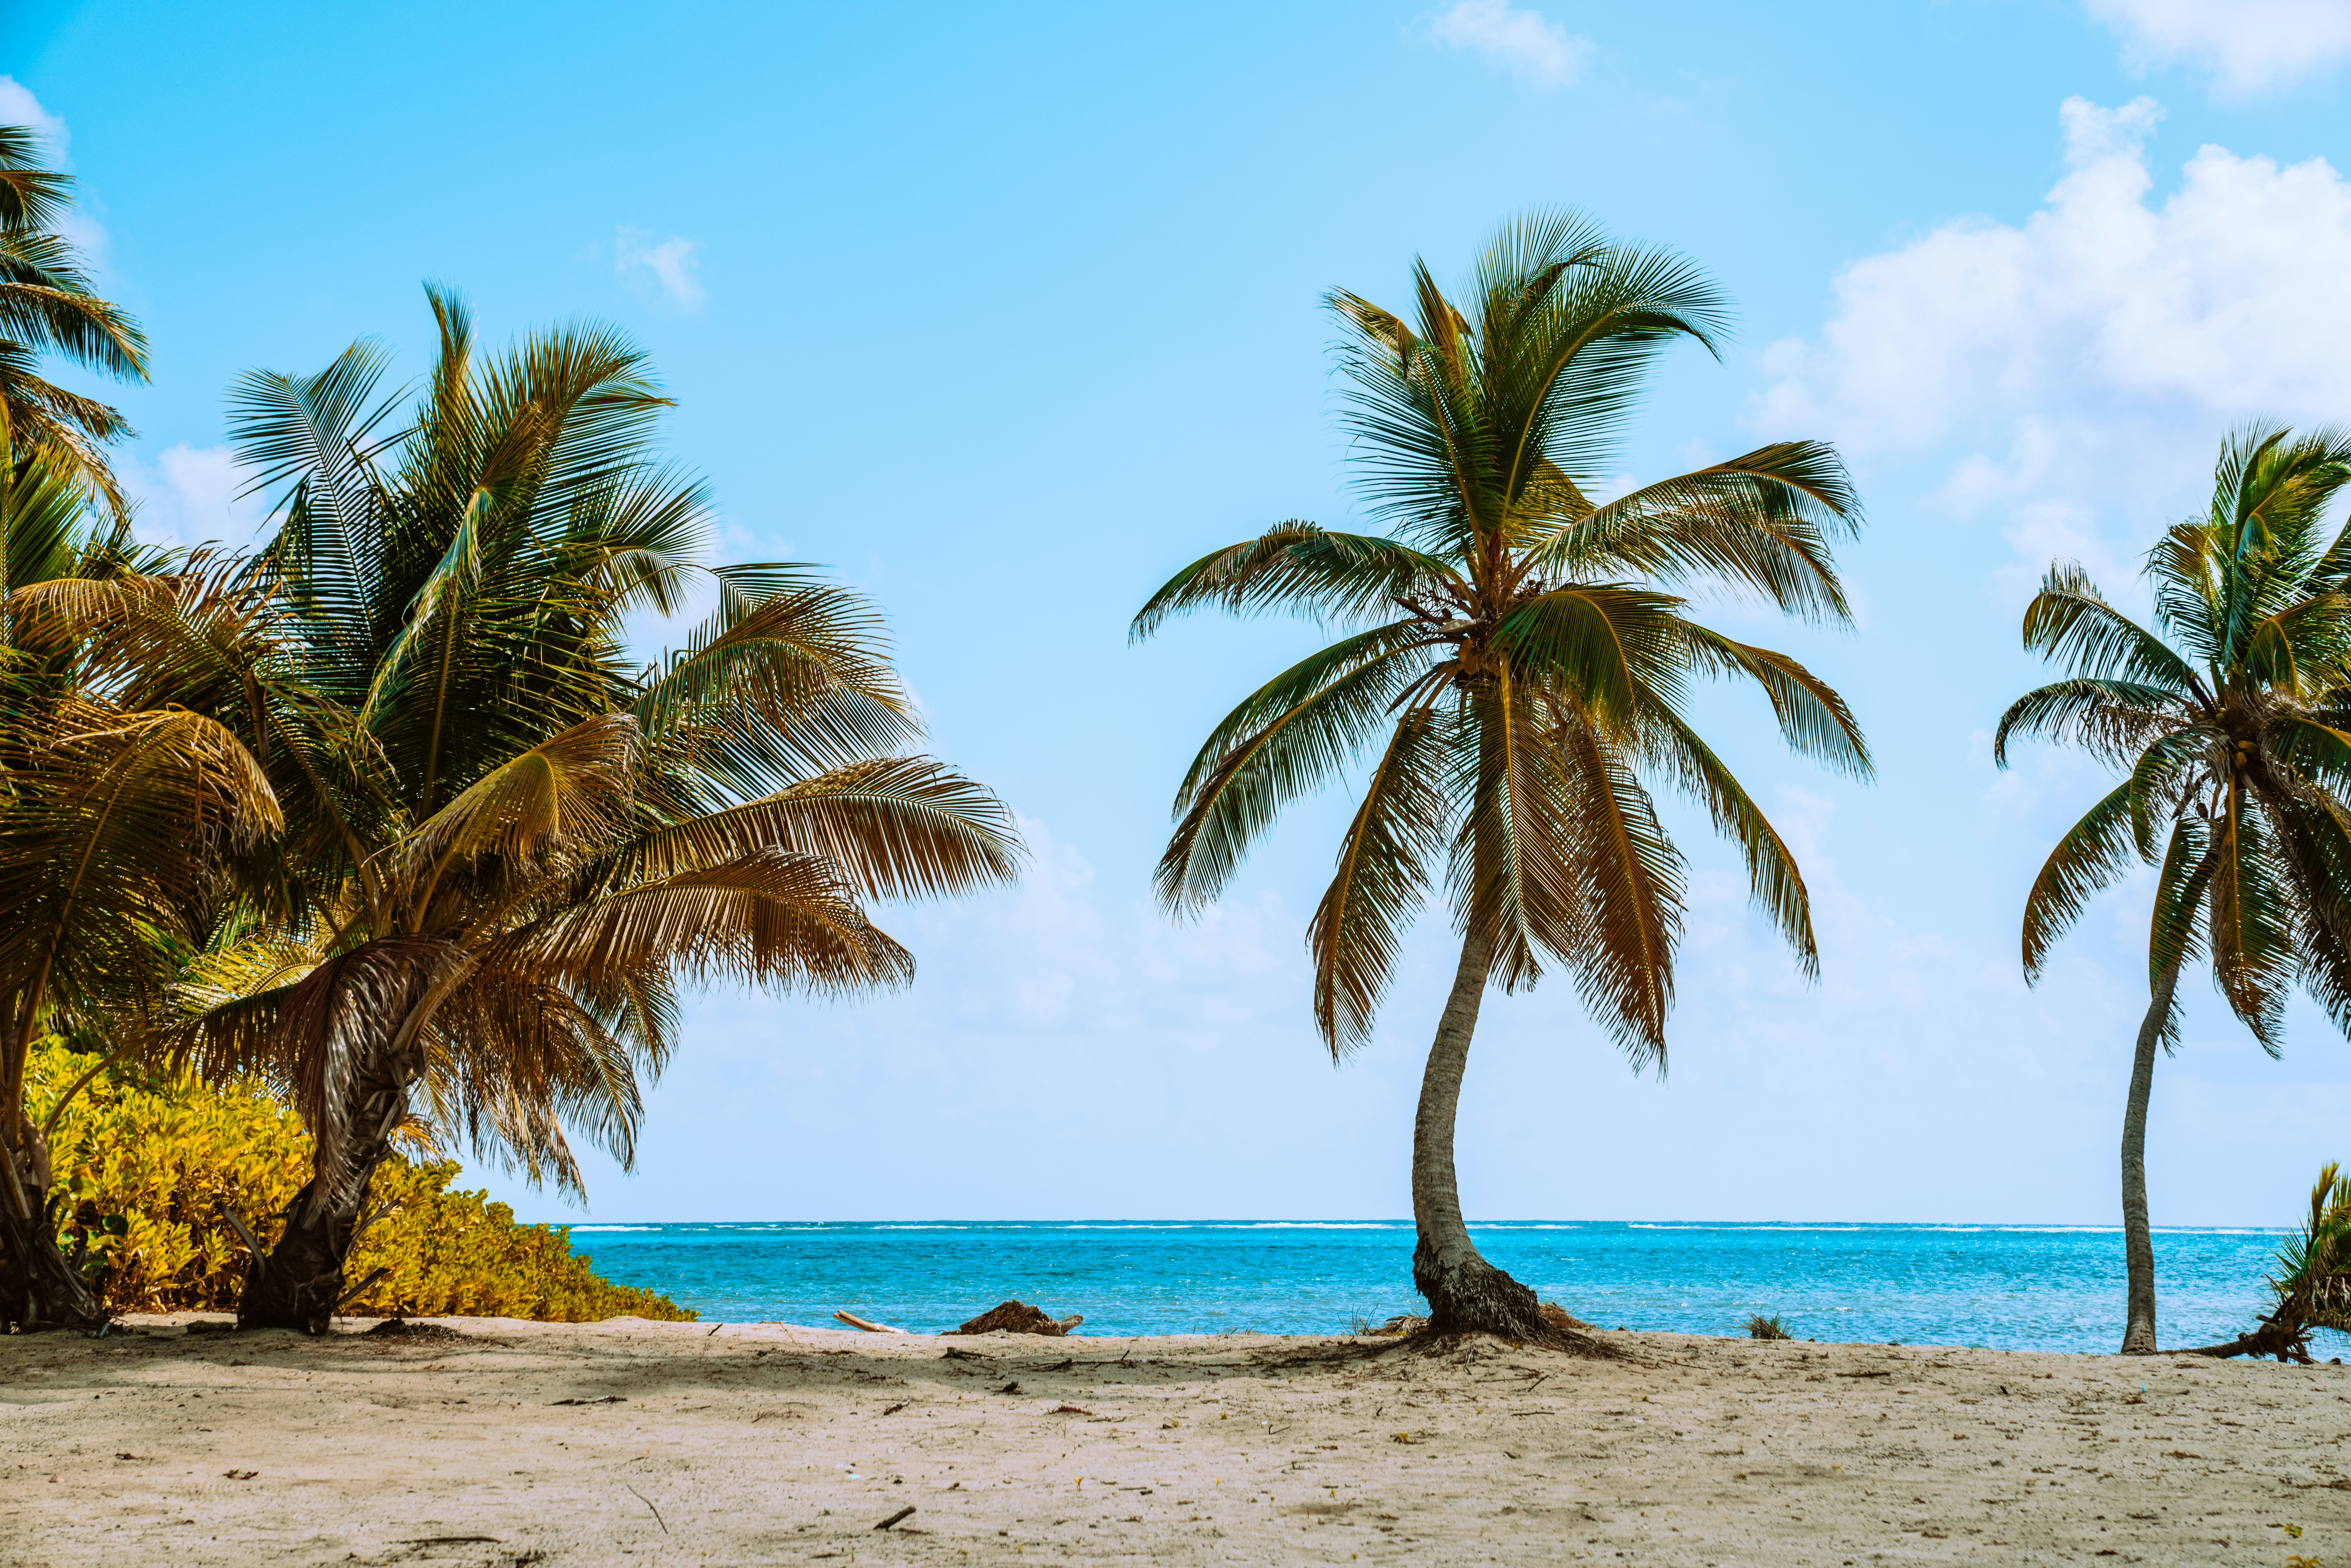 Palm trees along the sandy shoreline of a tropical beach.